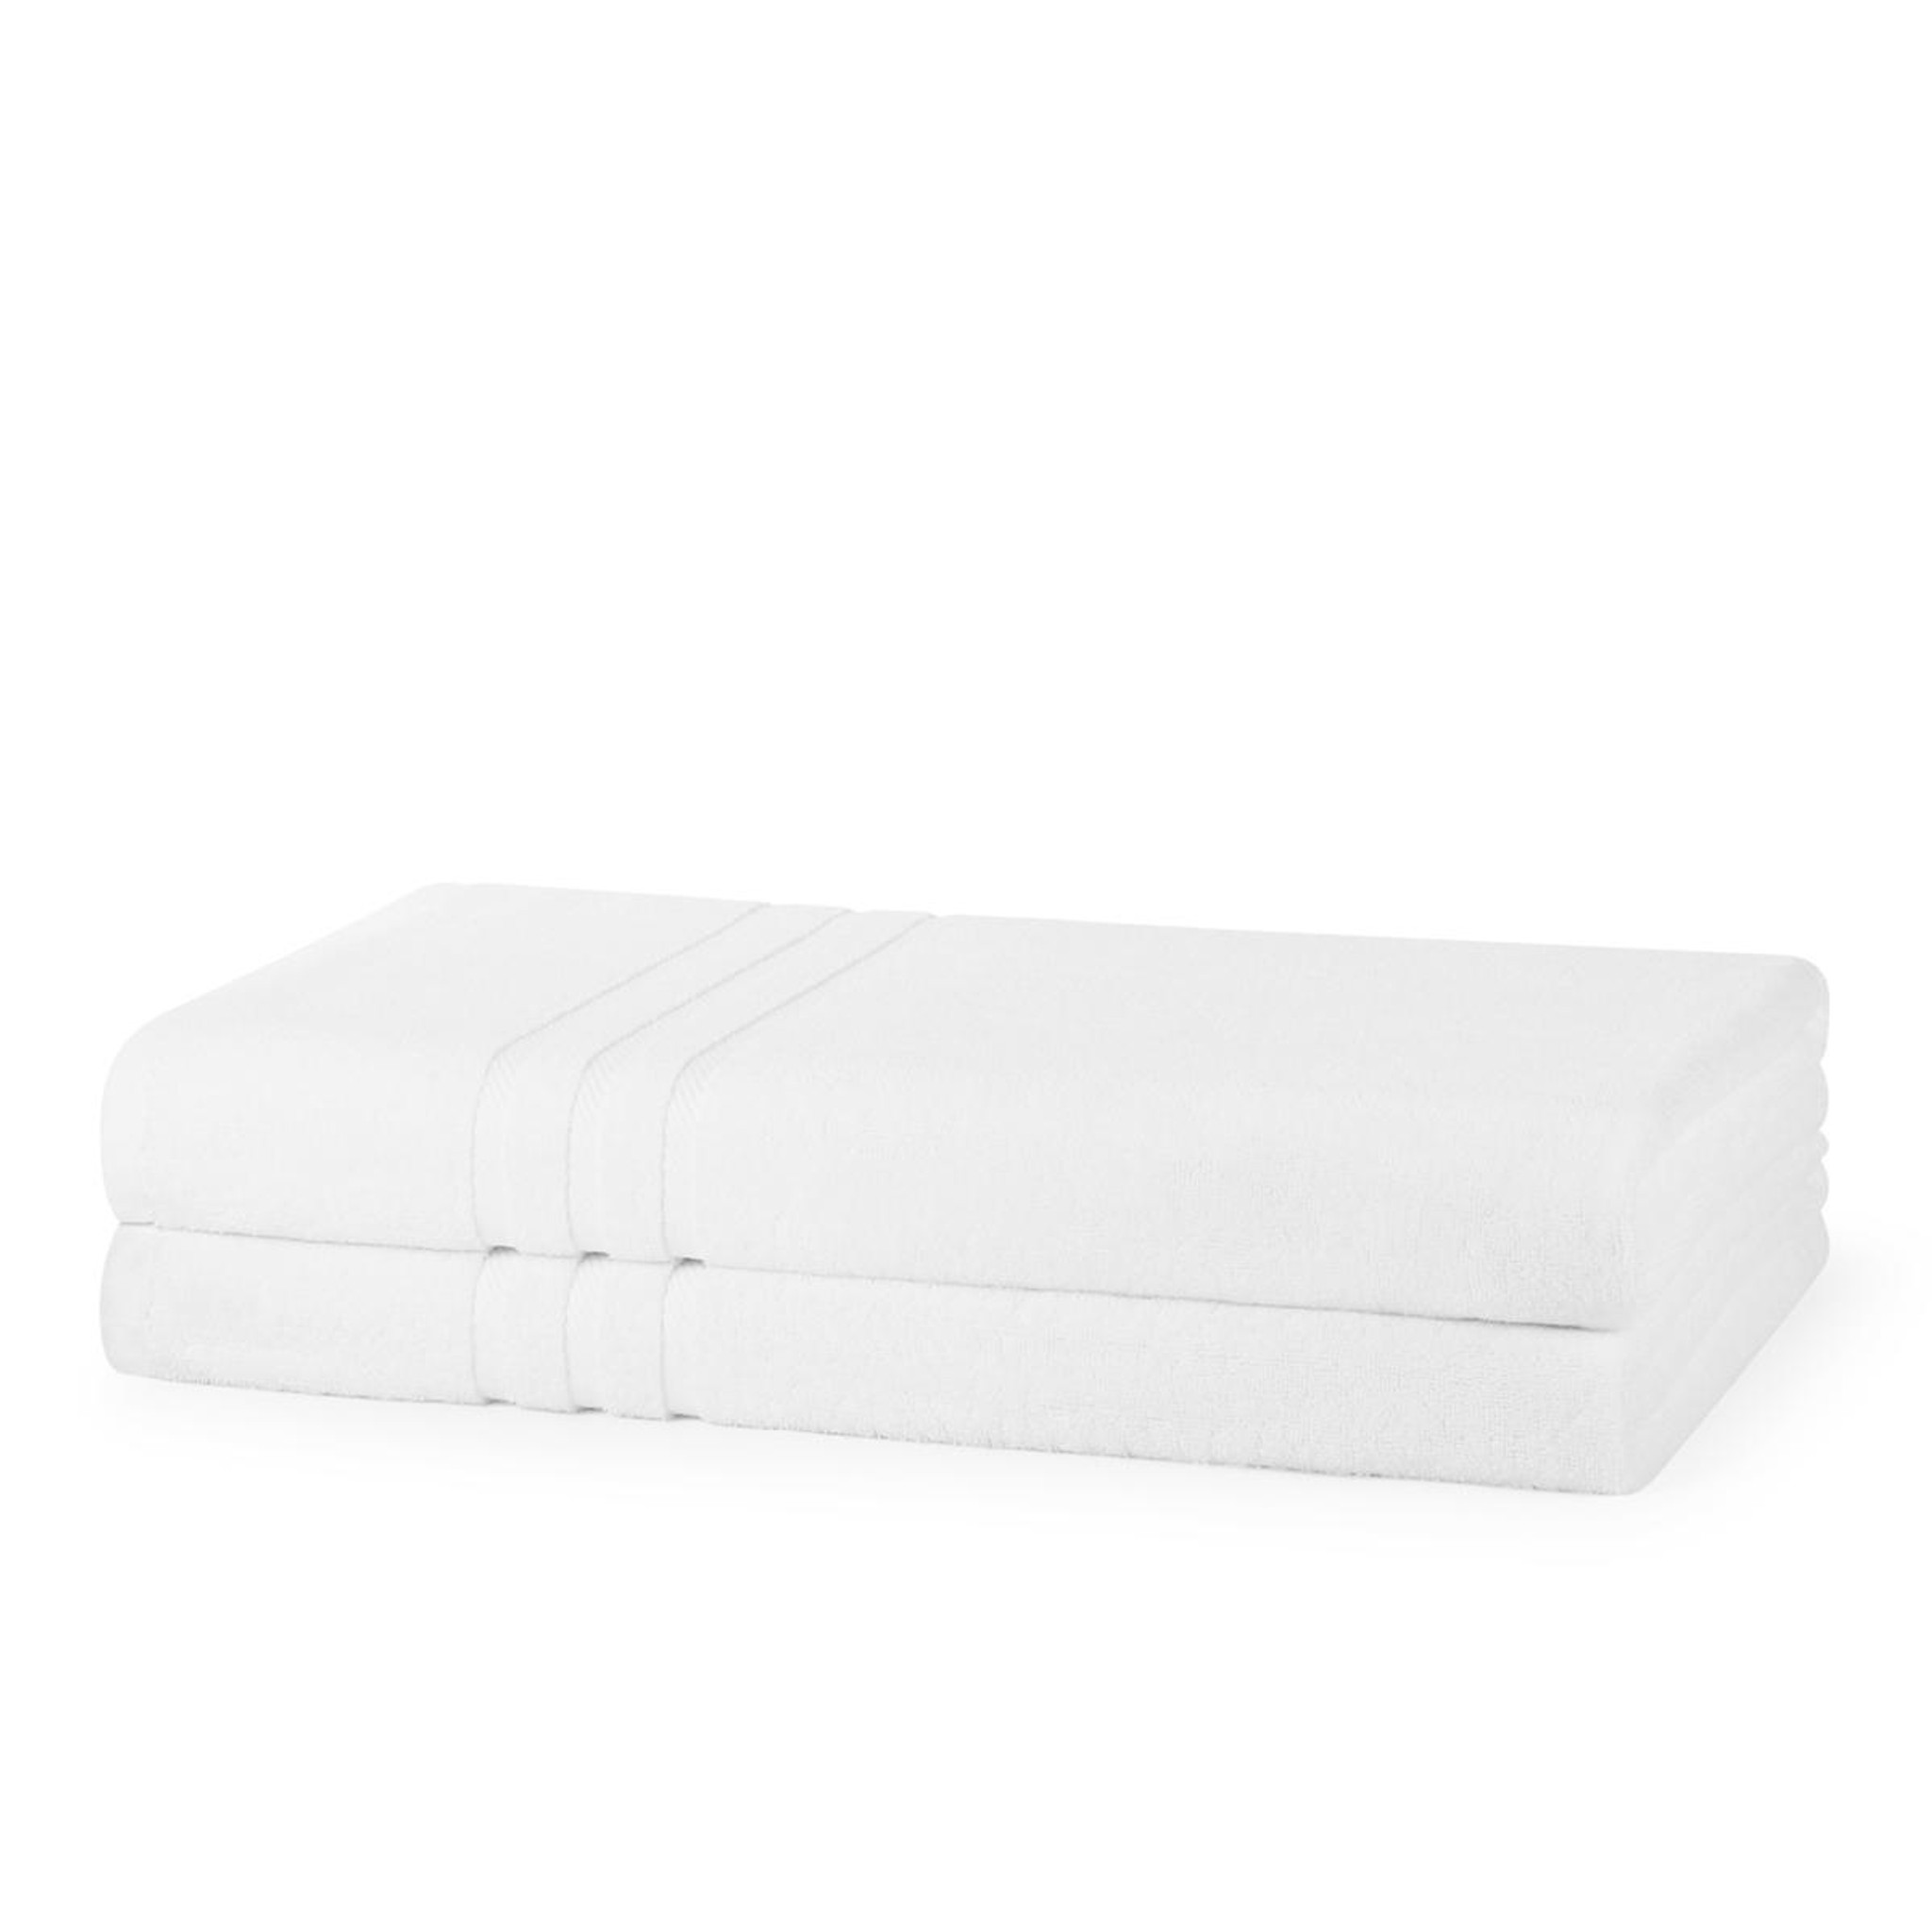 Wholesale 600 GSM Double Yarn White Bath Sheet